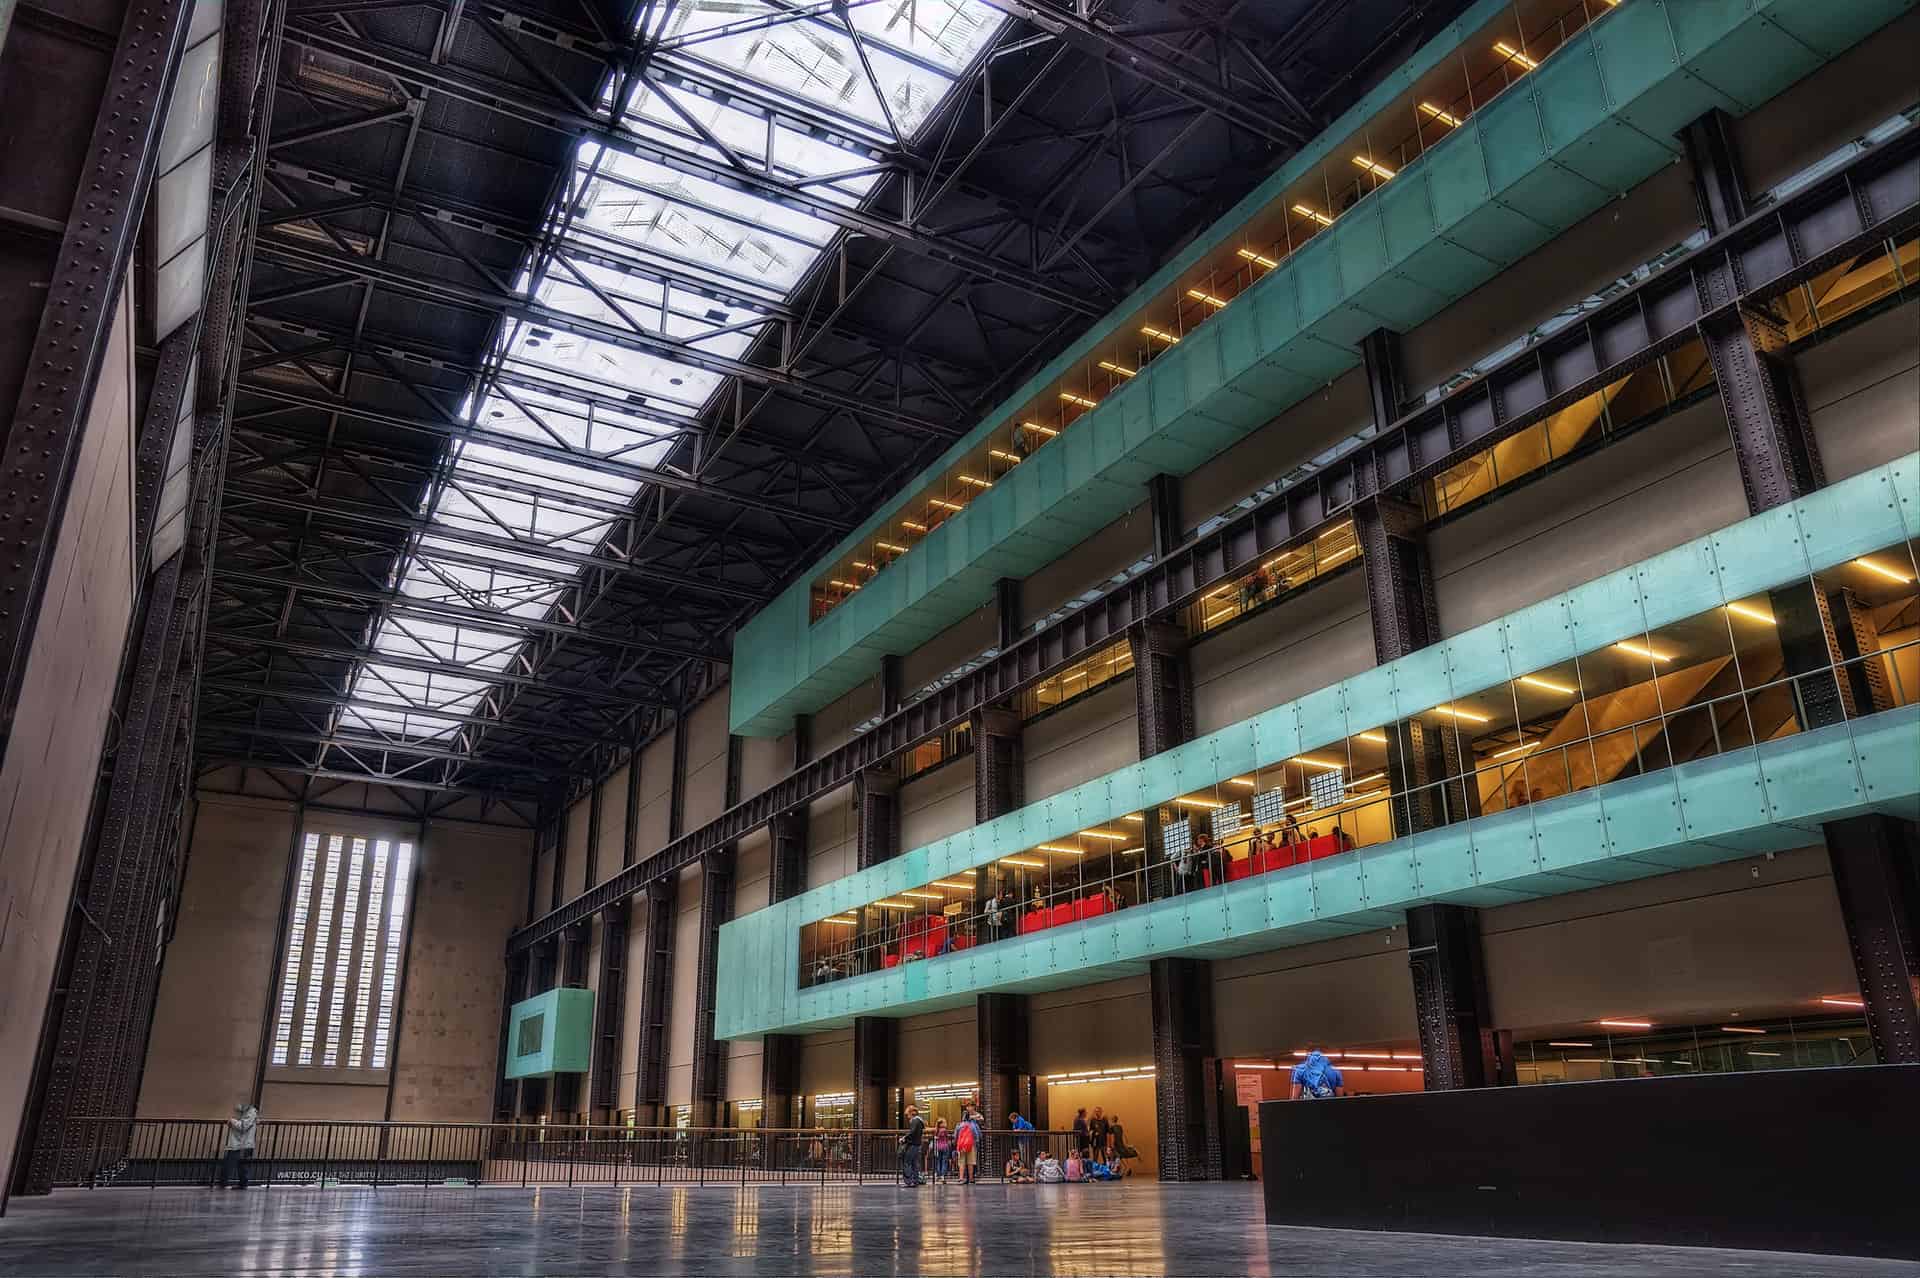 Inside the Tate Modern Museum in Britain